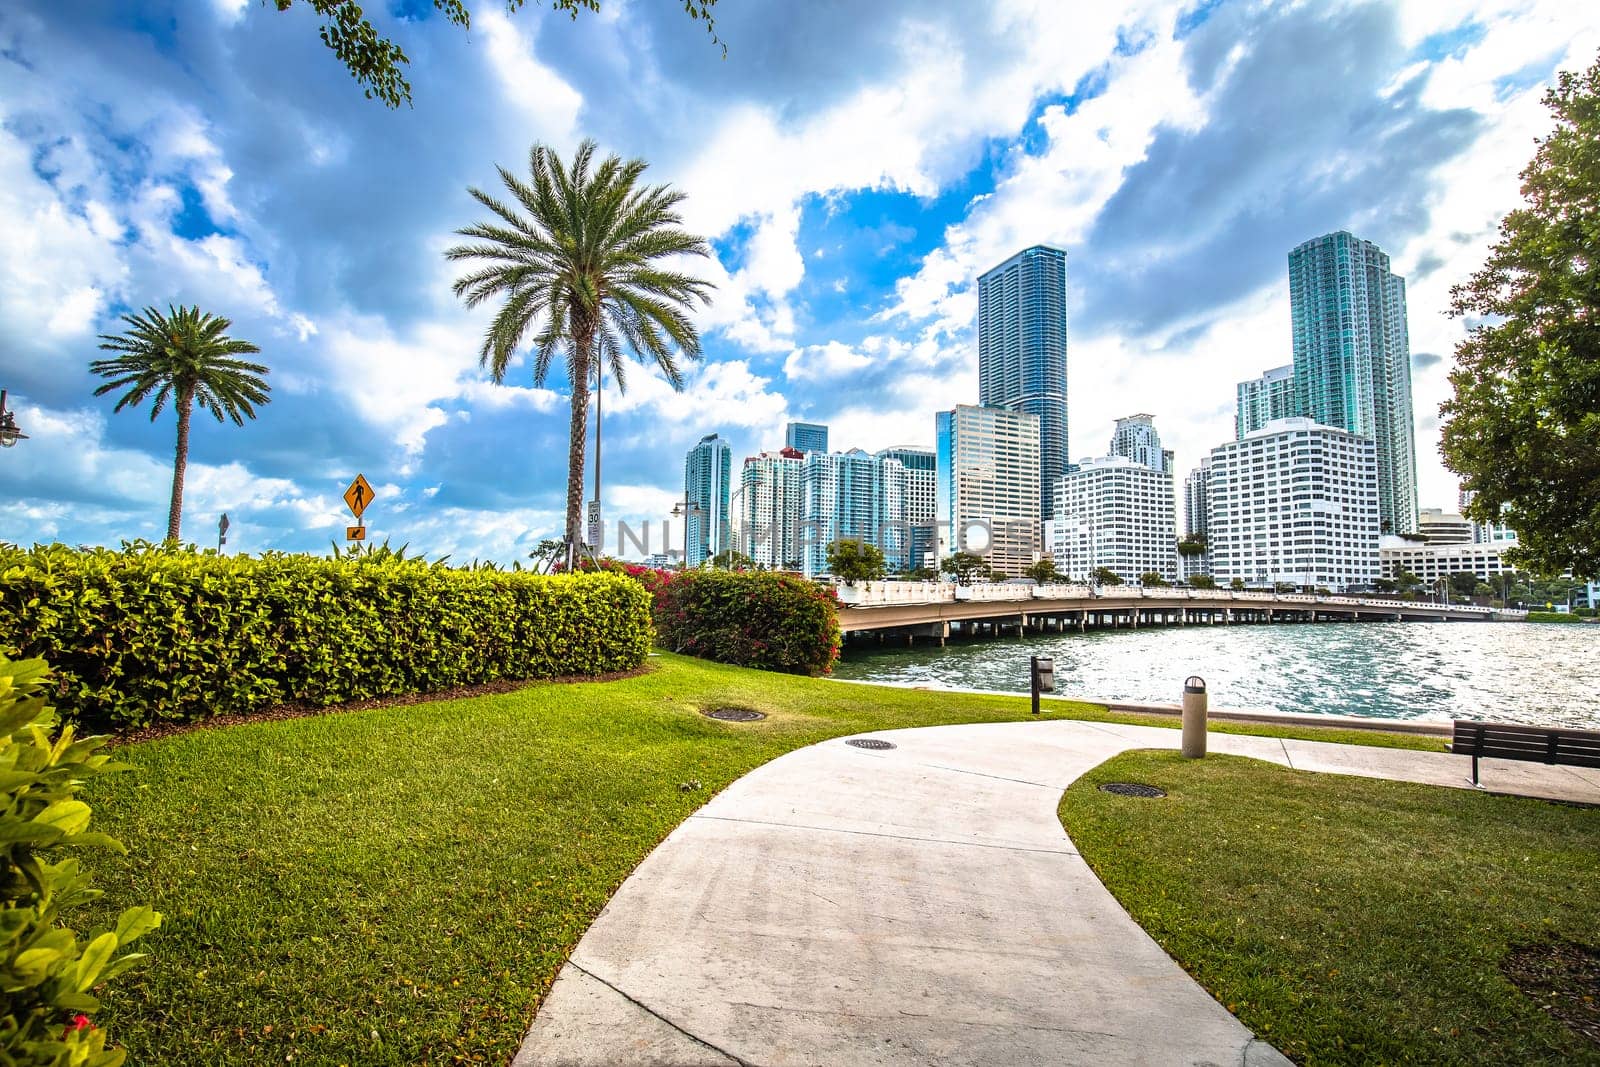 Miami skyline and waterfront view, Florida by xbrchx